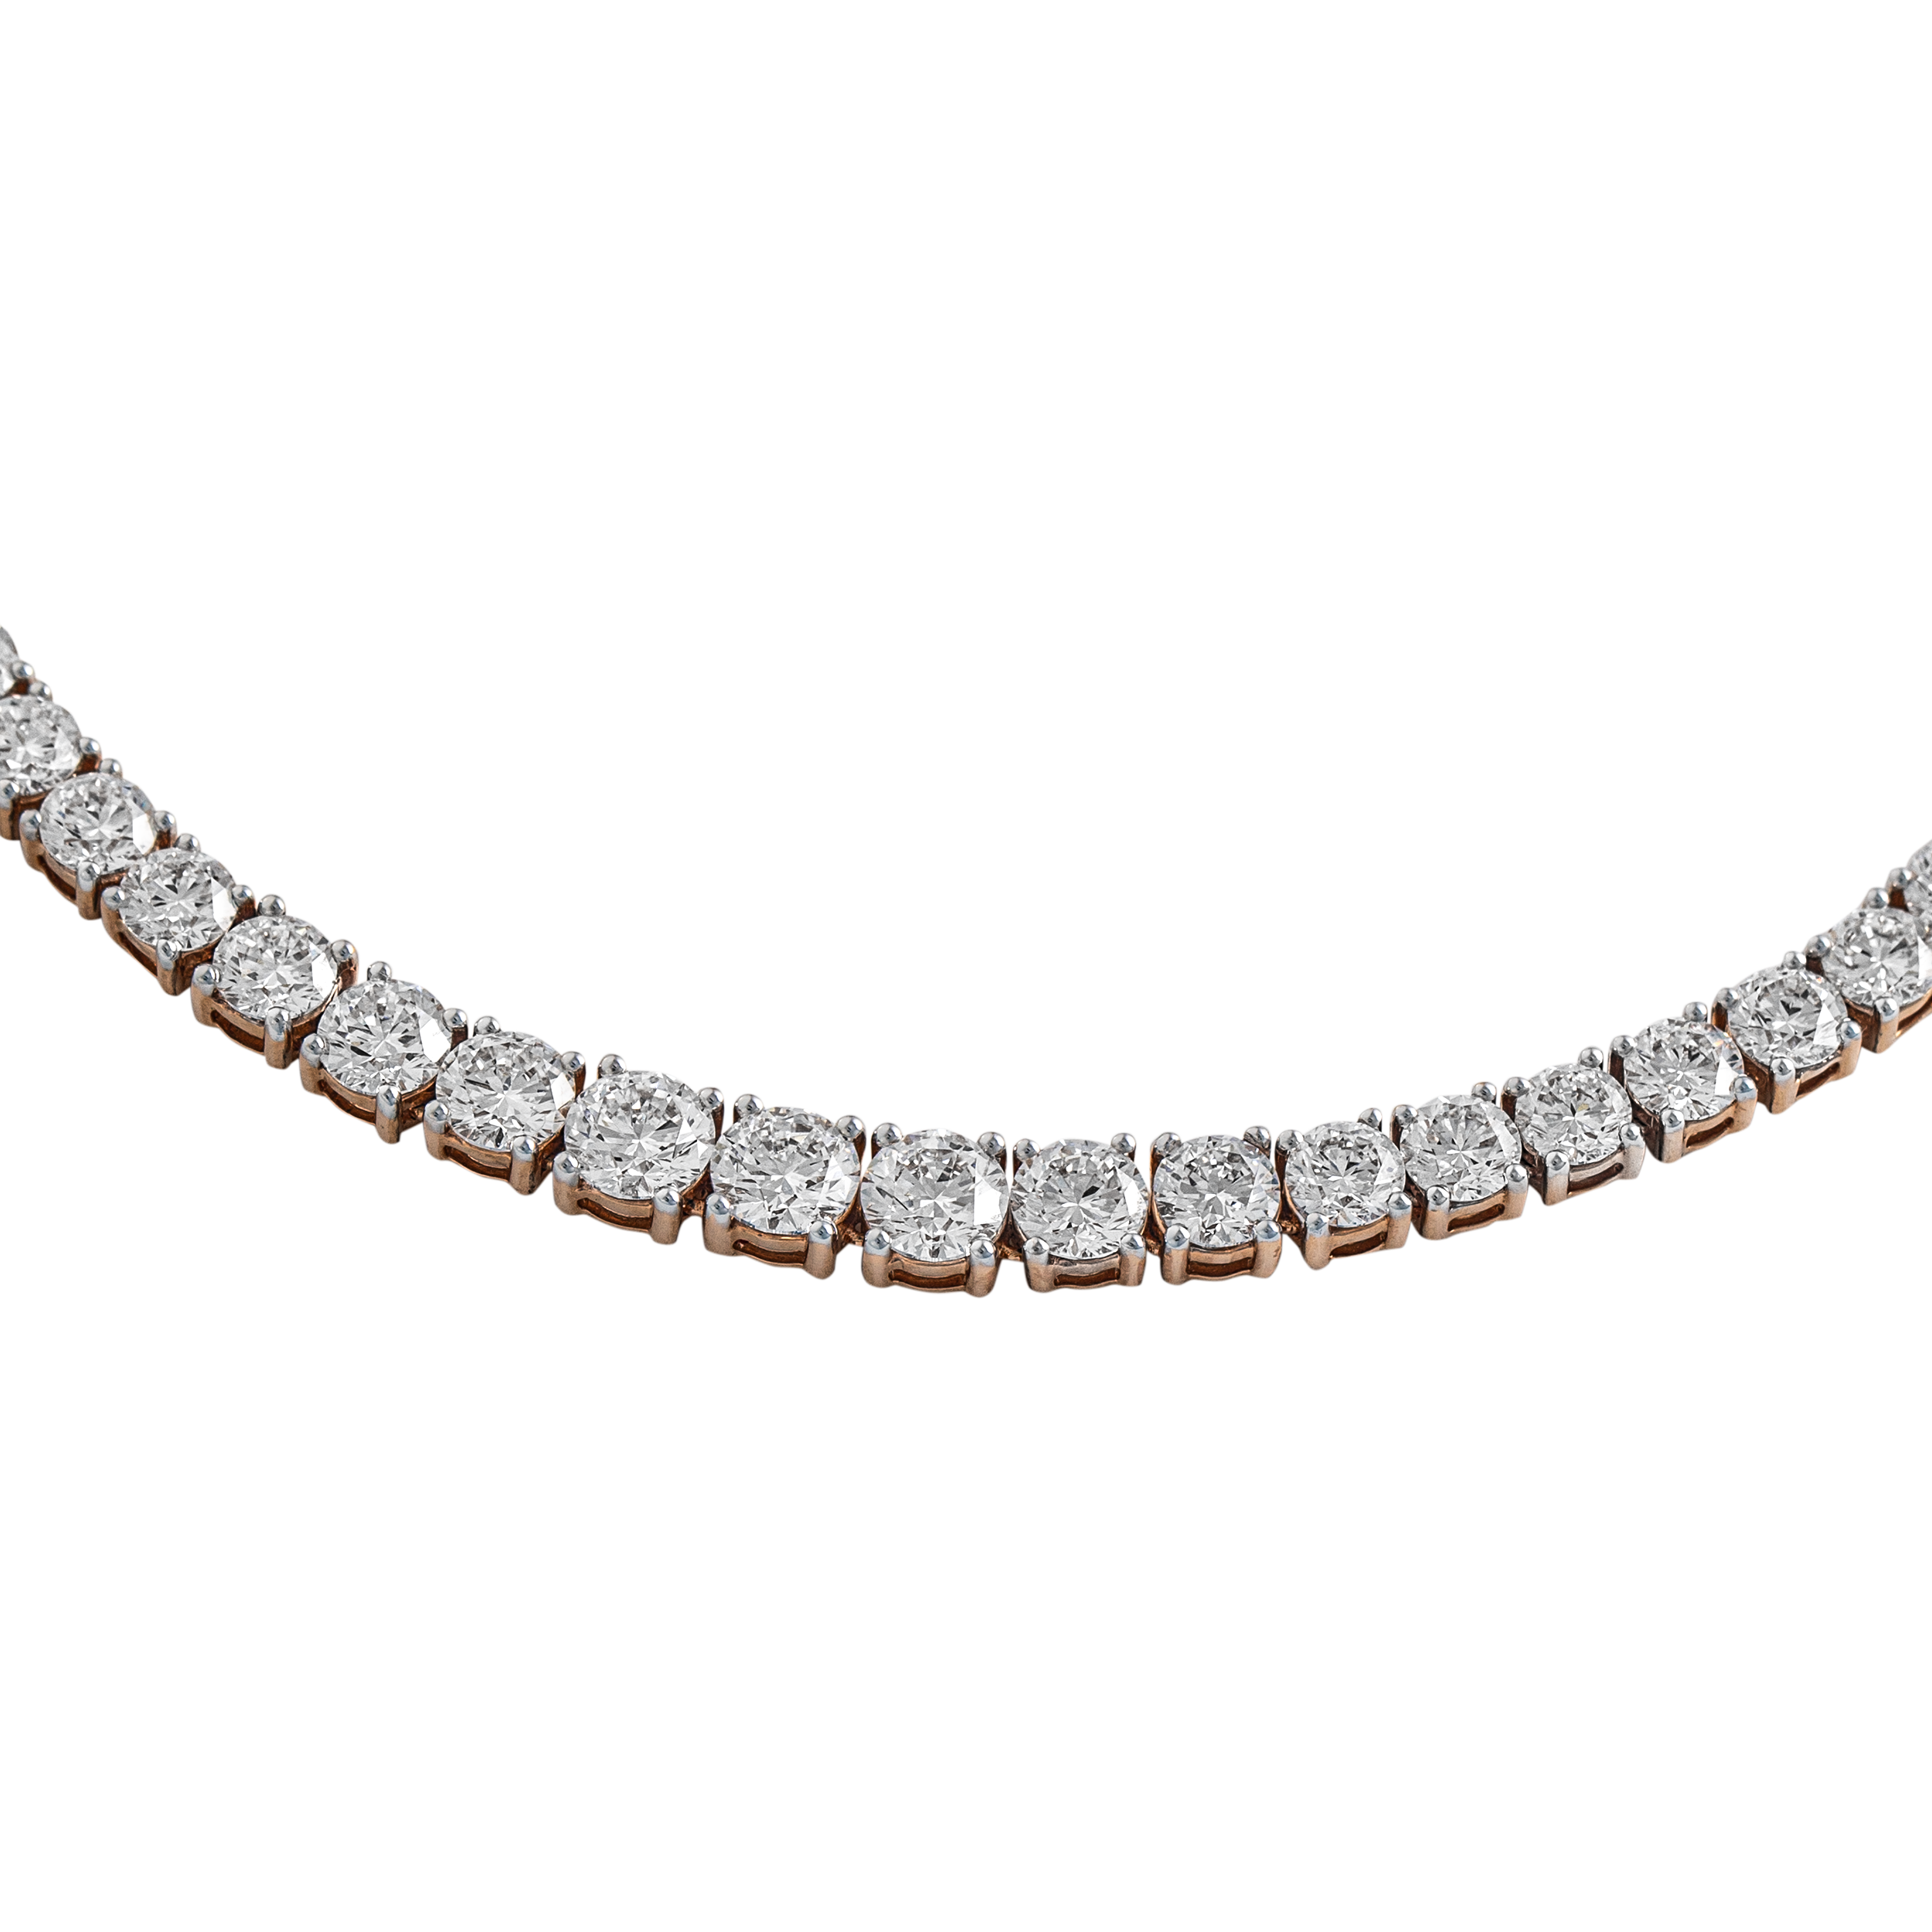 Designer Lab Grown Diamond Elegant Necklace | SKU: 0019053080